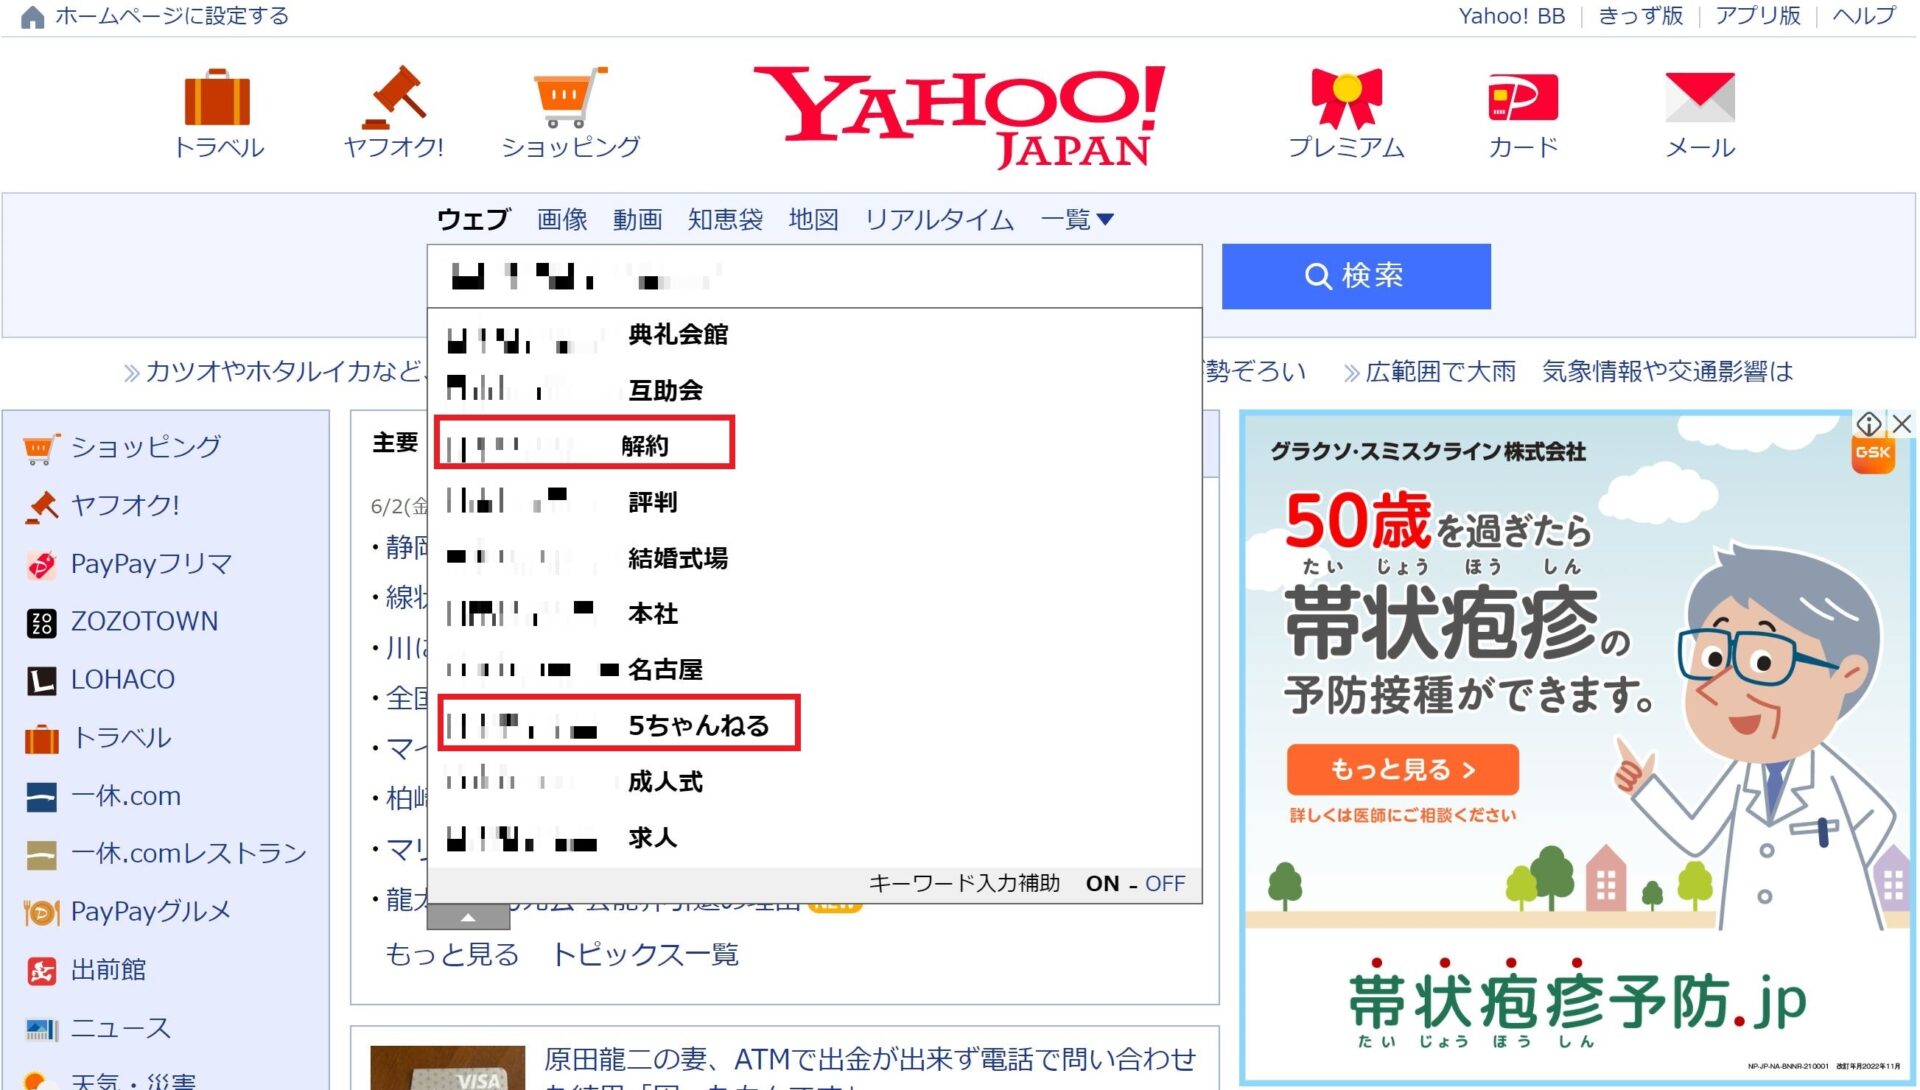 Yahoo！検索画面で予測キーワードにネガティブな言葉が並ぶ葬儀社の指名検索画像